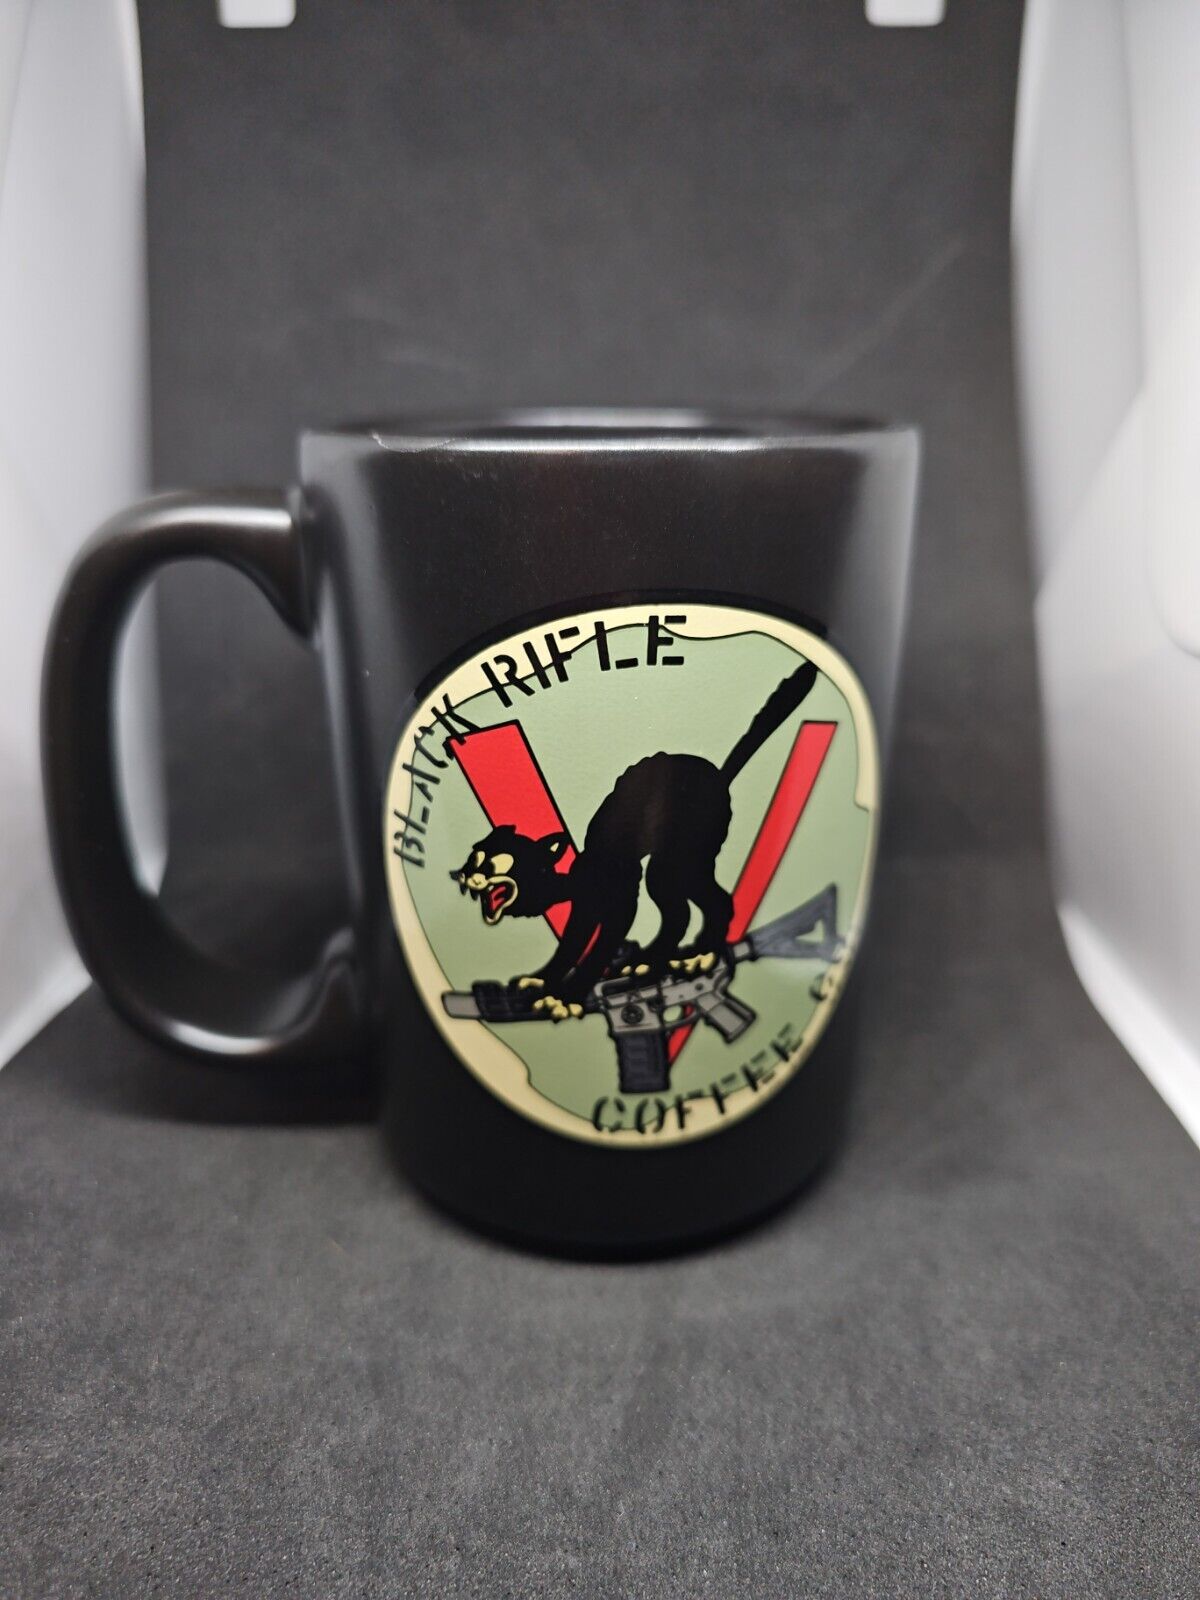 Black Rifle Coffee Company Mug - Super Rare Black Cat on Rifle Logo